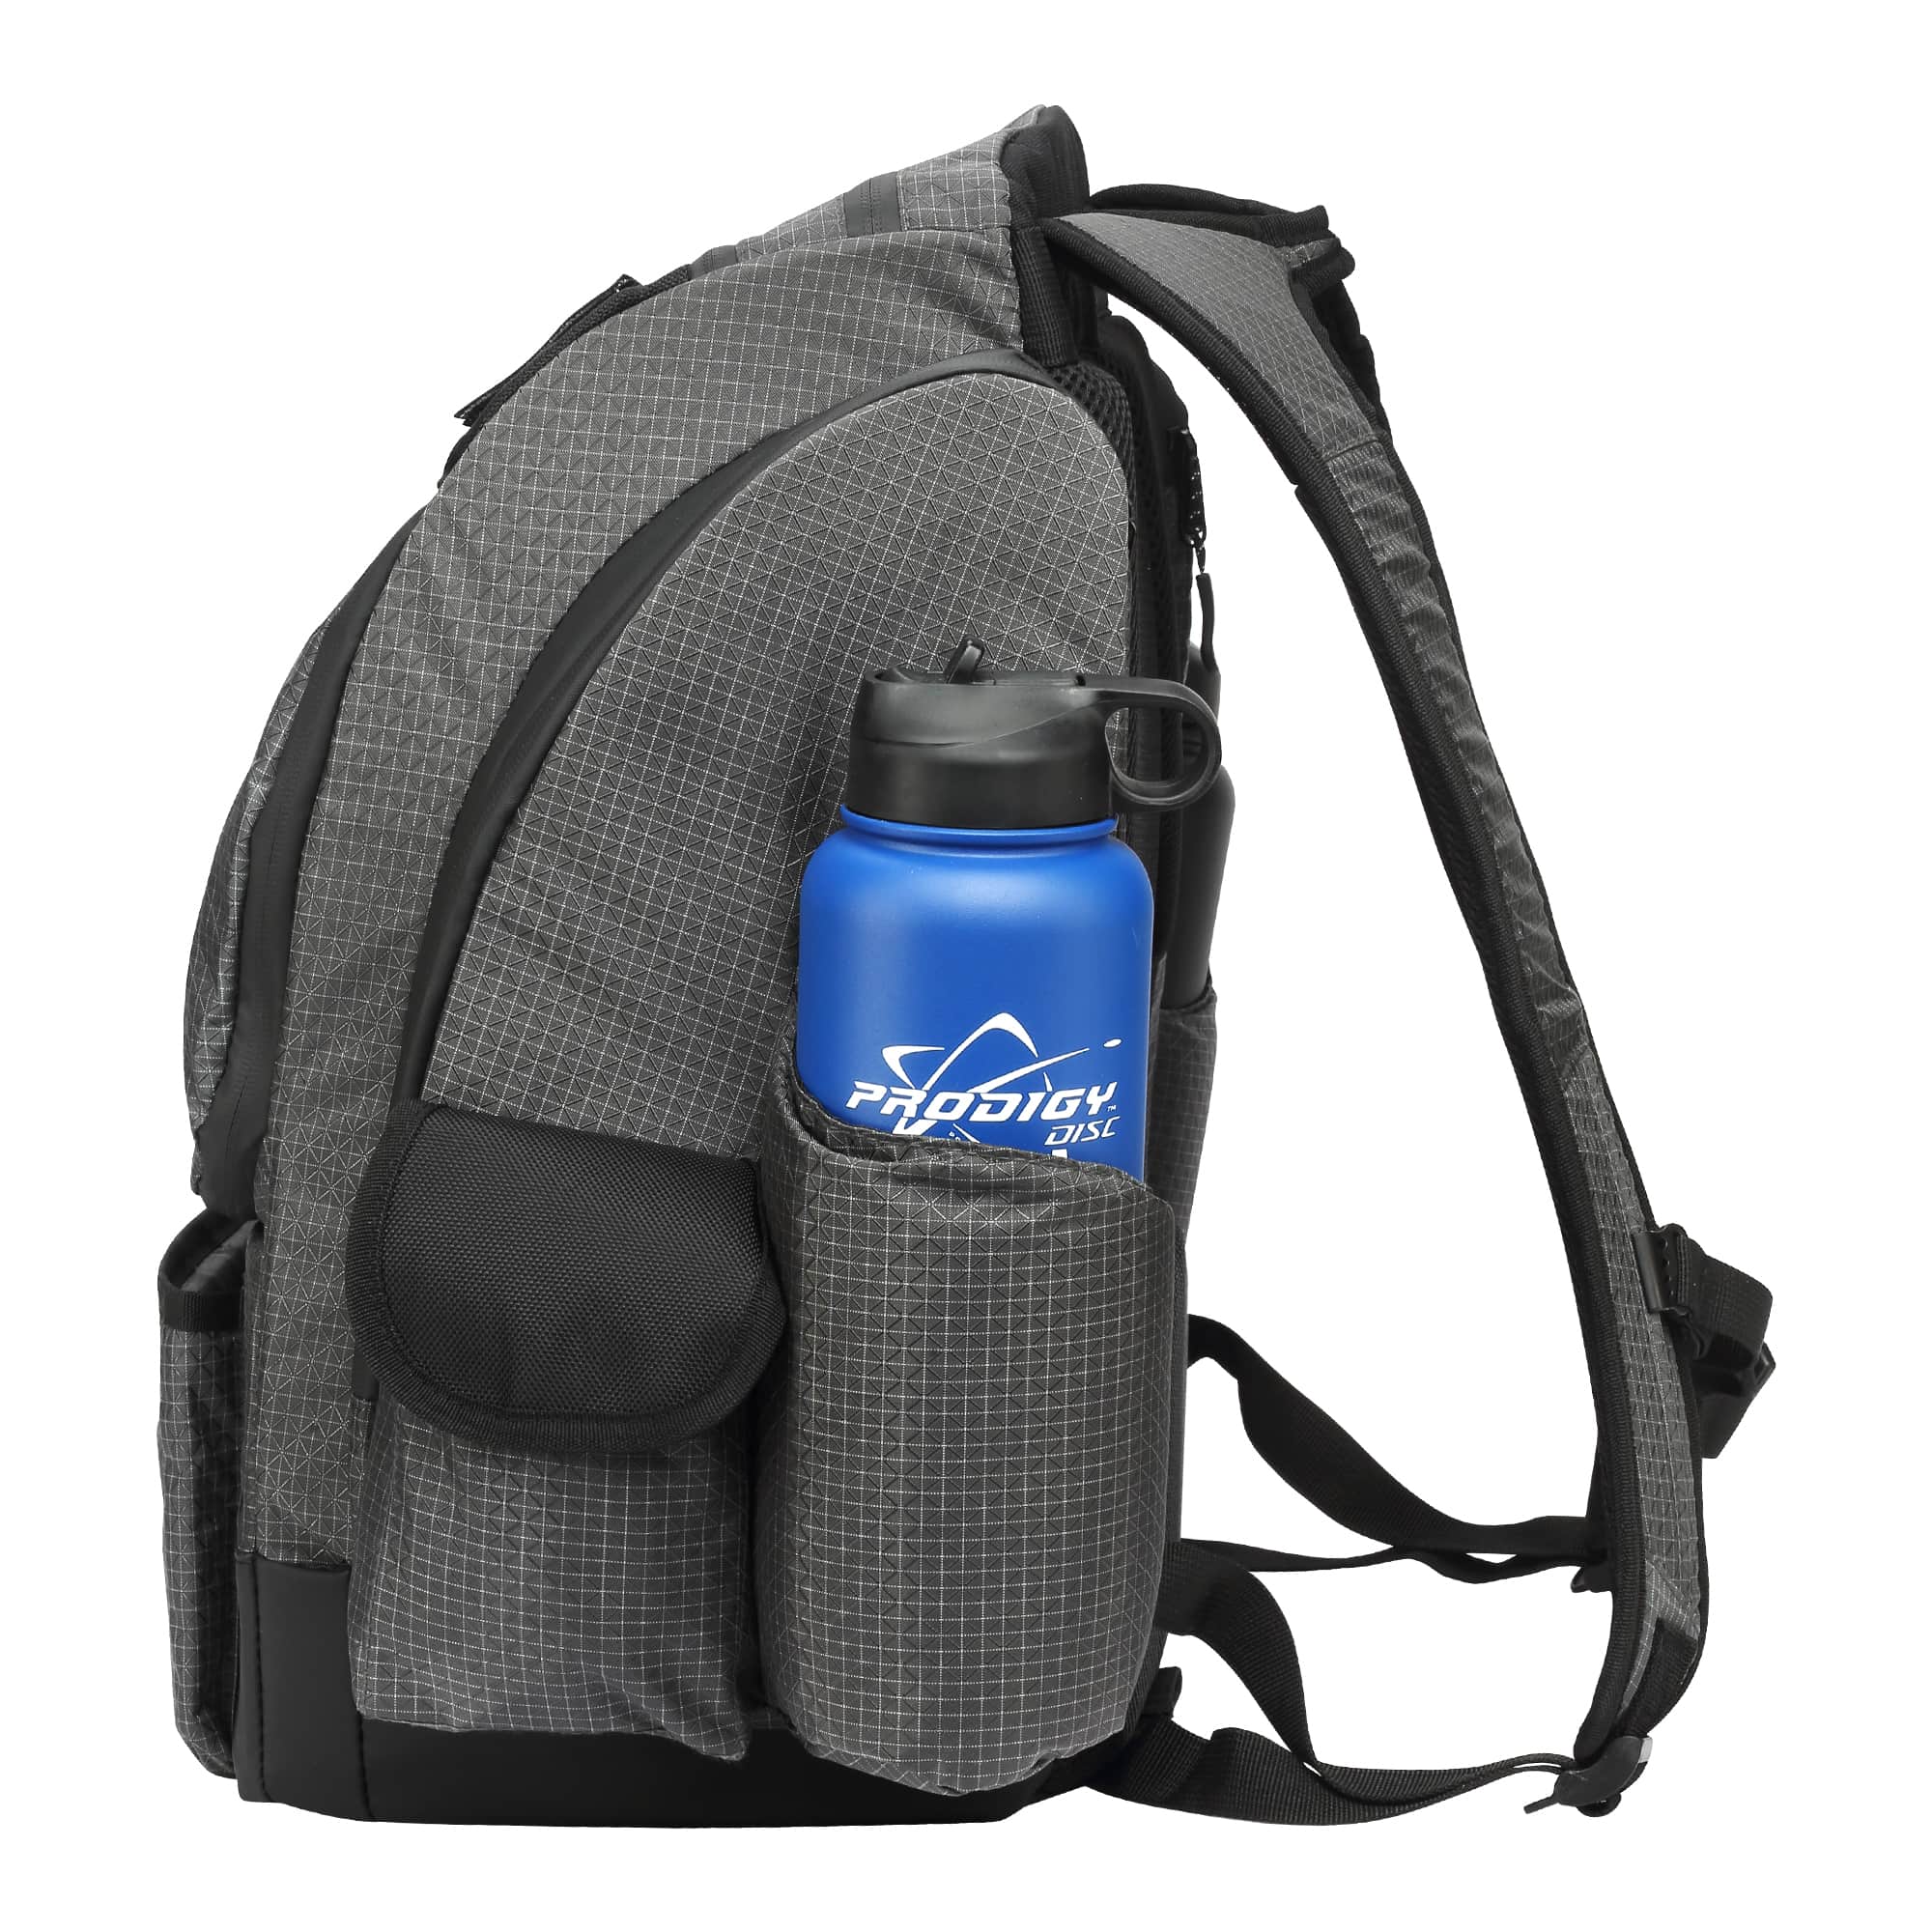 Prodigy BP-1 V3 Backpack - Navy Blue